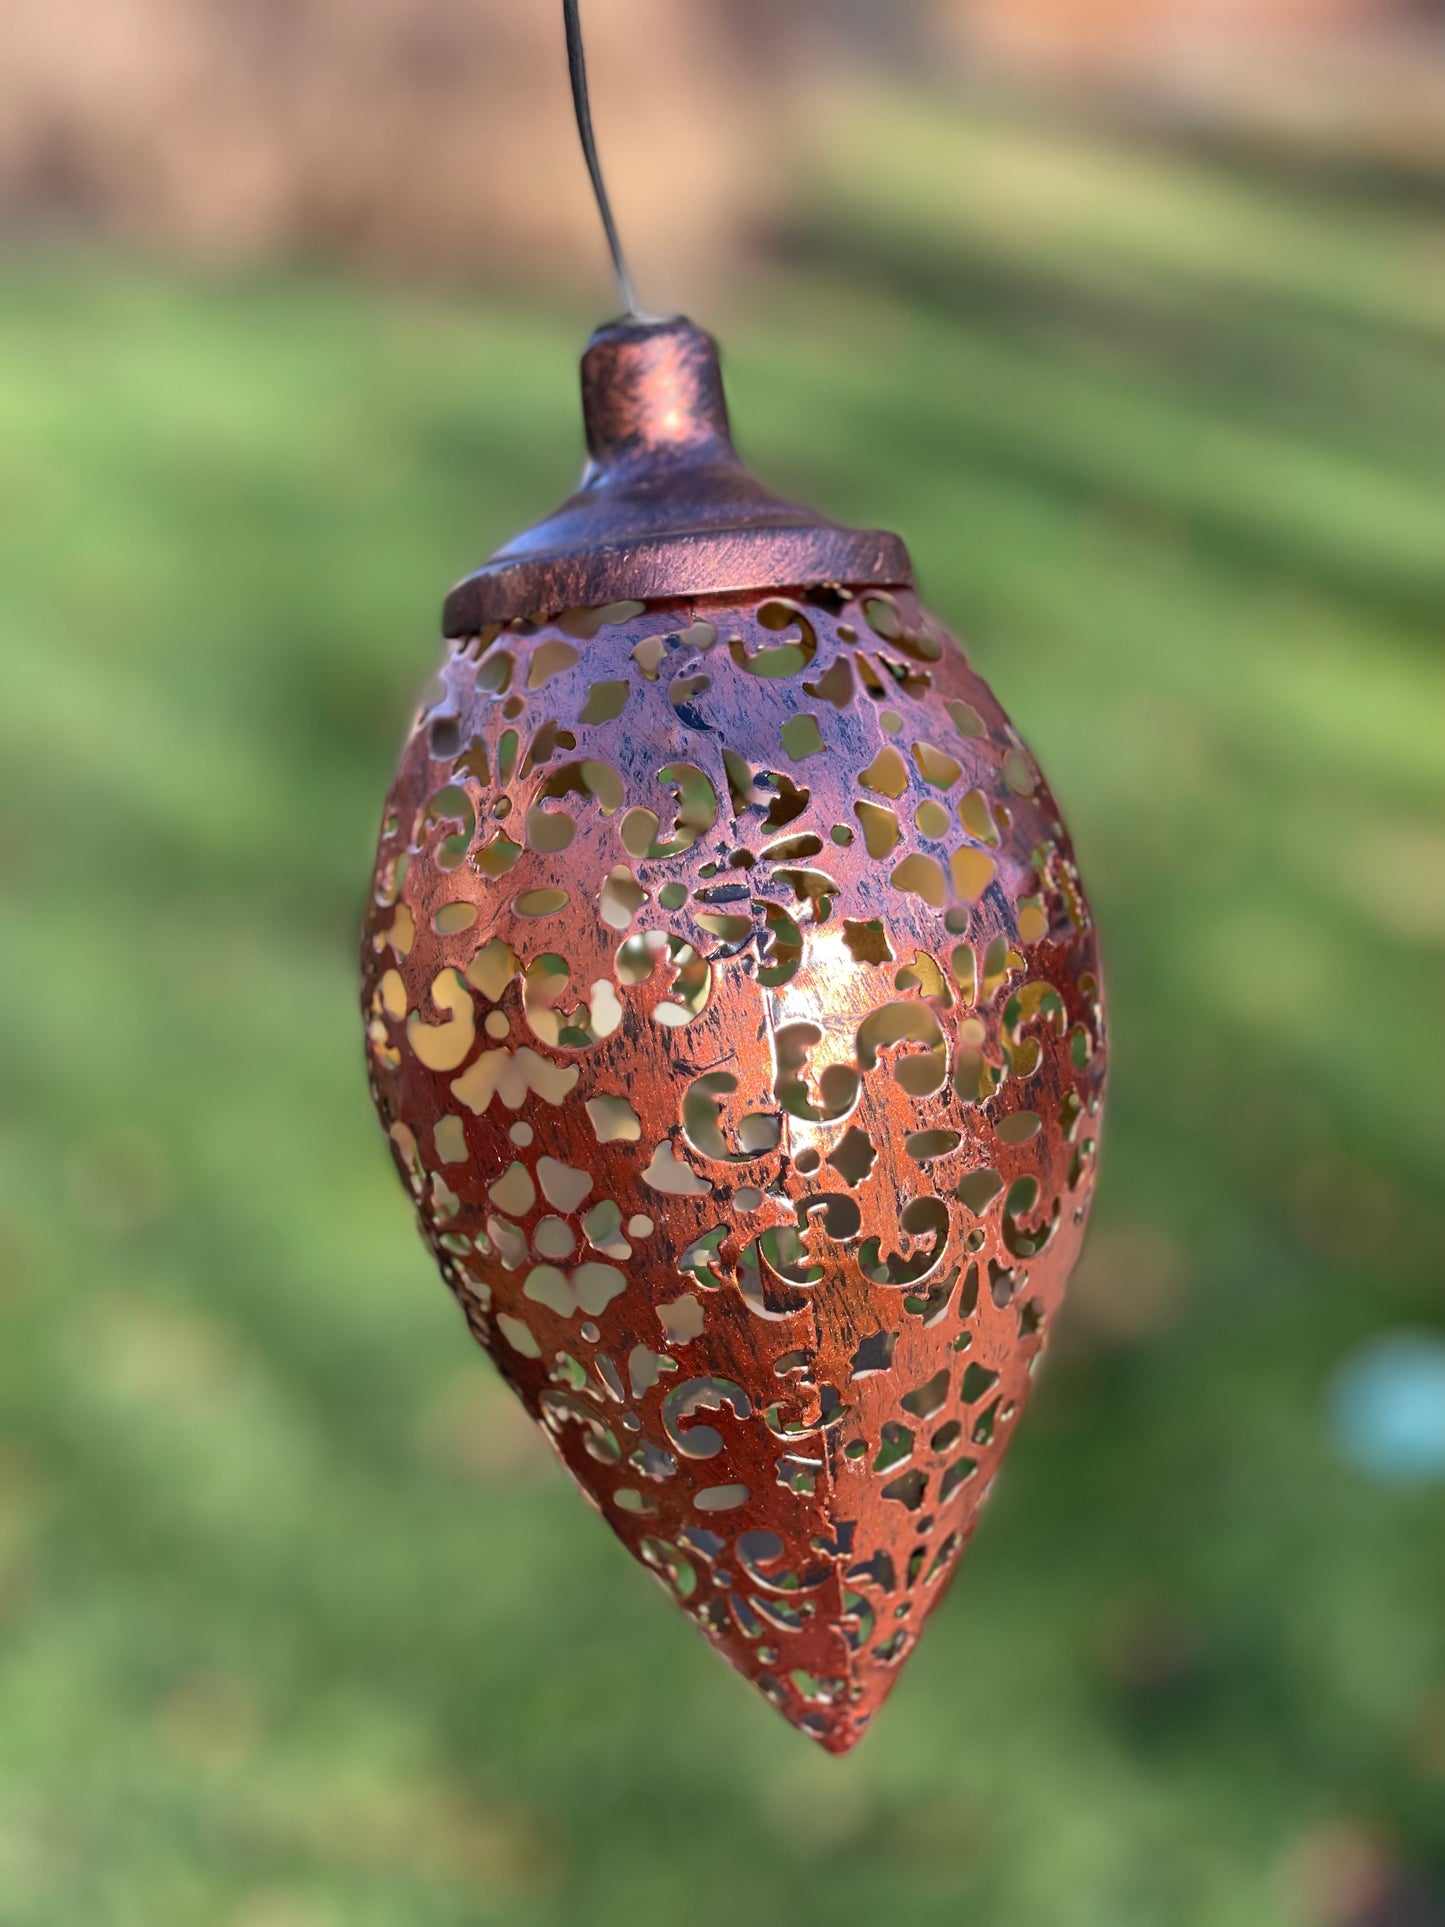 Evolving Modern Solar Outdoor Lanterns